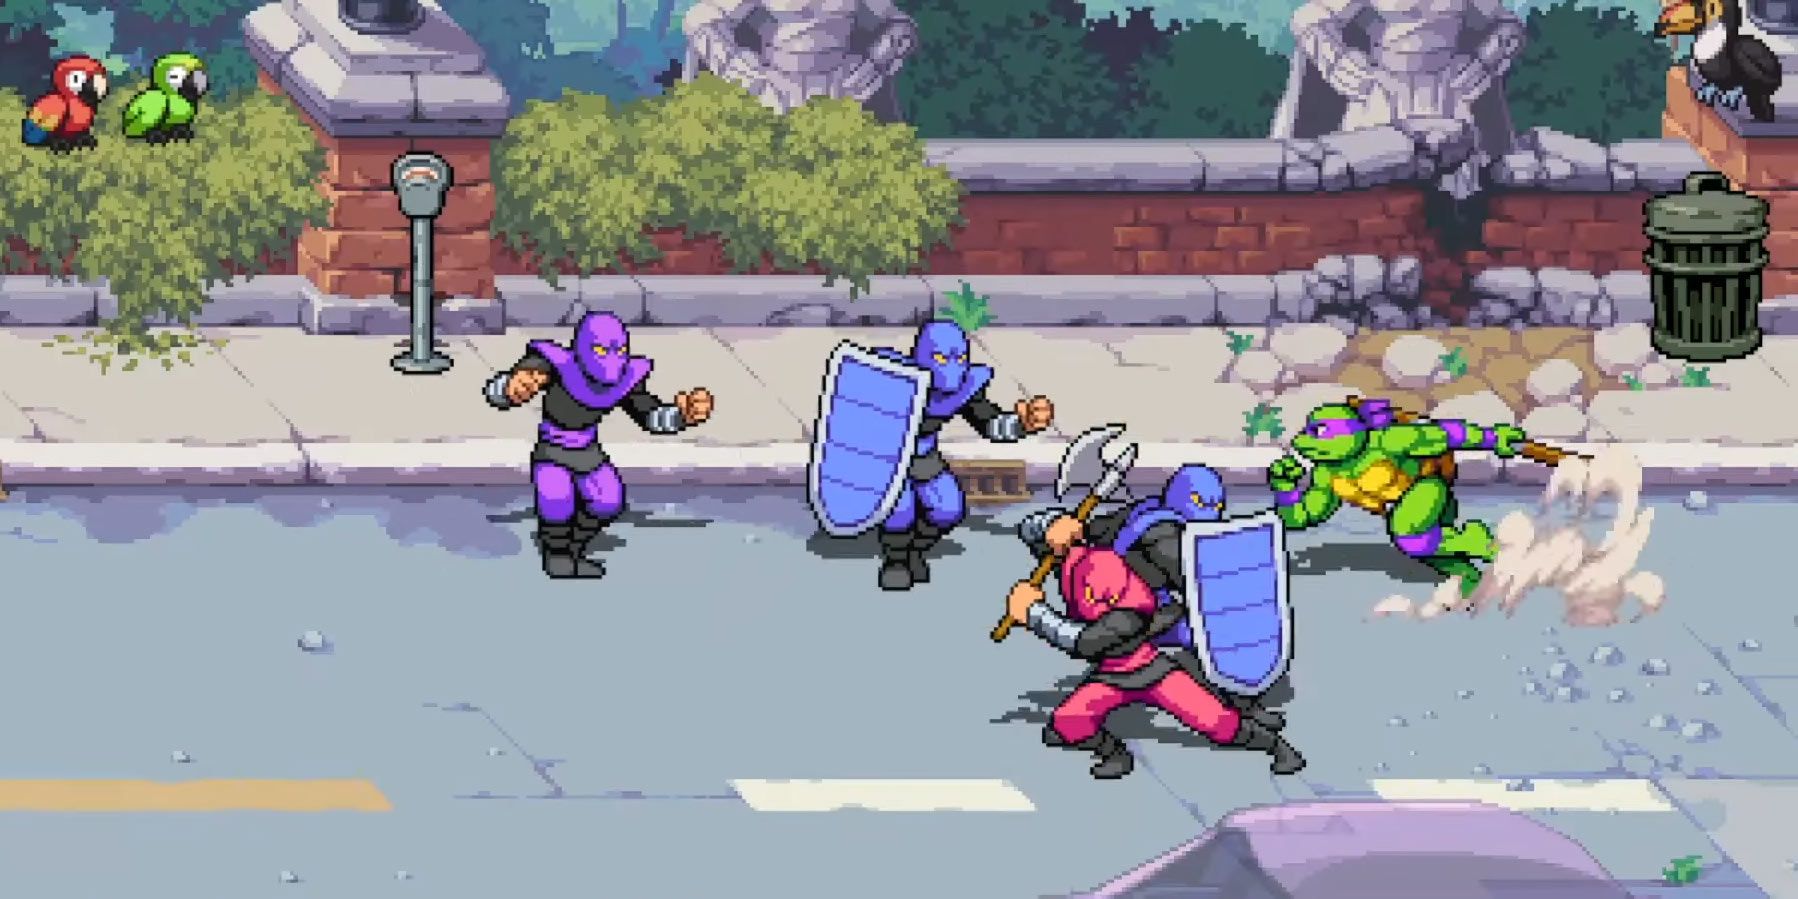 A screenshot showing Donatello dashing towards a group of Foot Soldiers in Teenage Mutant Ninja Turtles: Shredder's Revenge